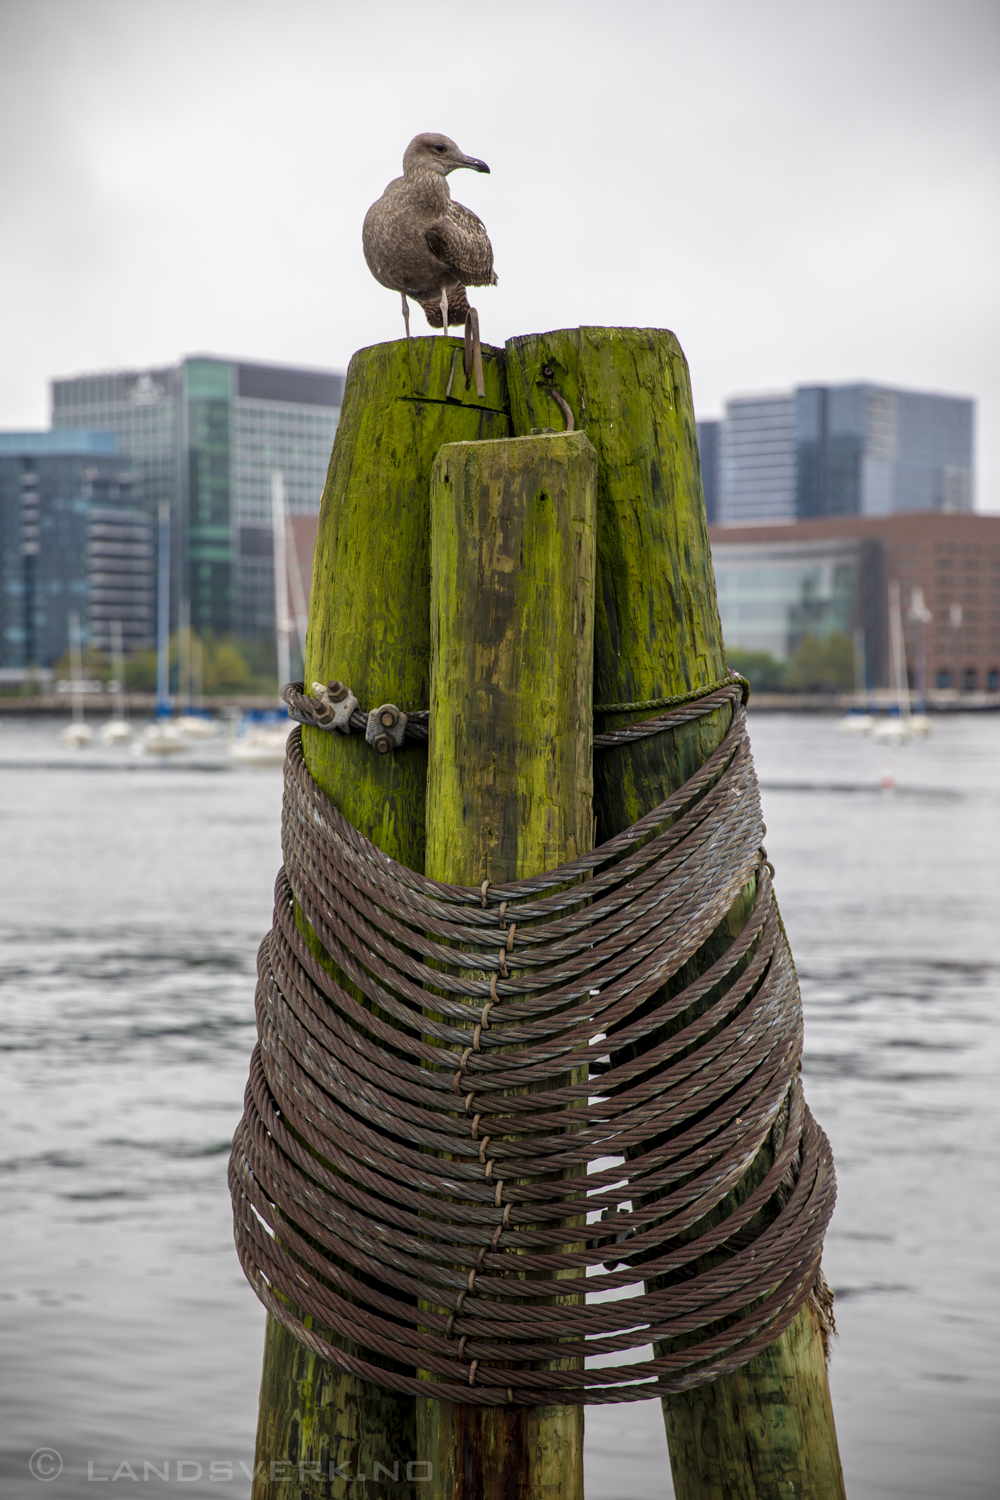 At the docks in Boston, Massachusetts. 

(Canon EOS 5D Mark IV / Canon EF 24-70mm f/2.8 L II USM)